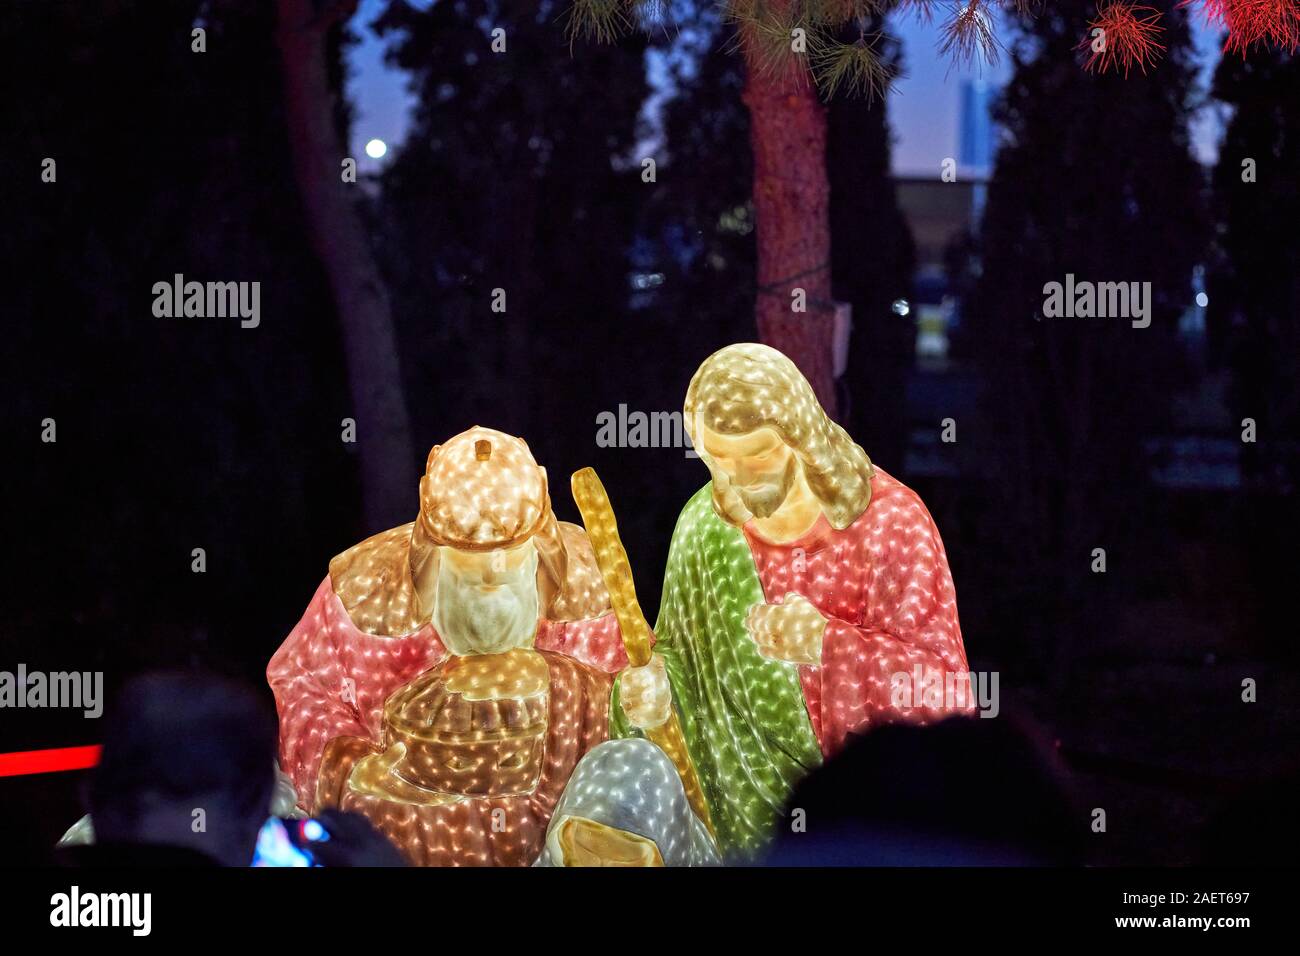 People crowd around a nativity scene featuring a wise man, Mary, and Joseph at Torrejon de Ardoz Christmas Fair Stock Photo